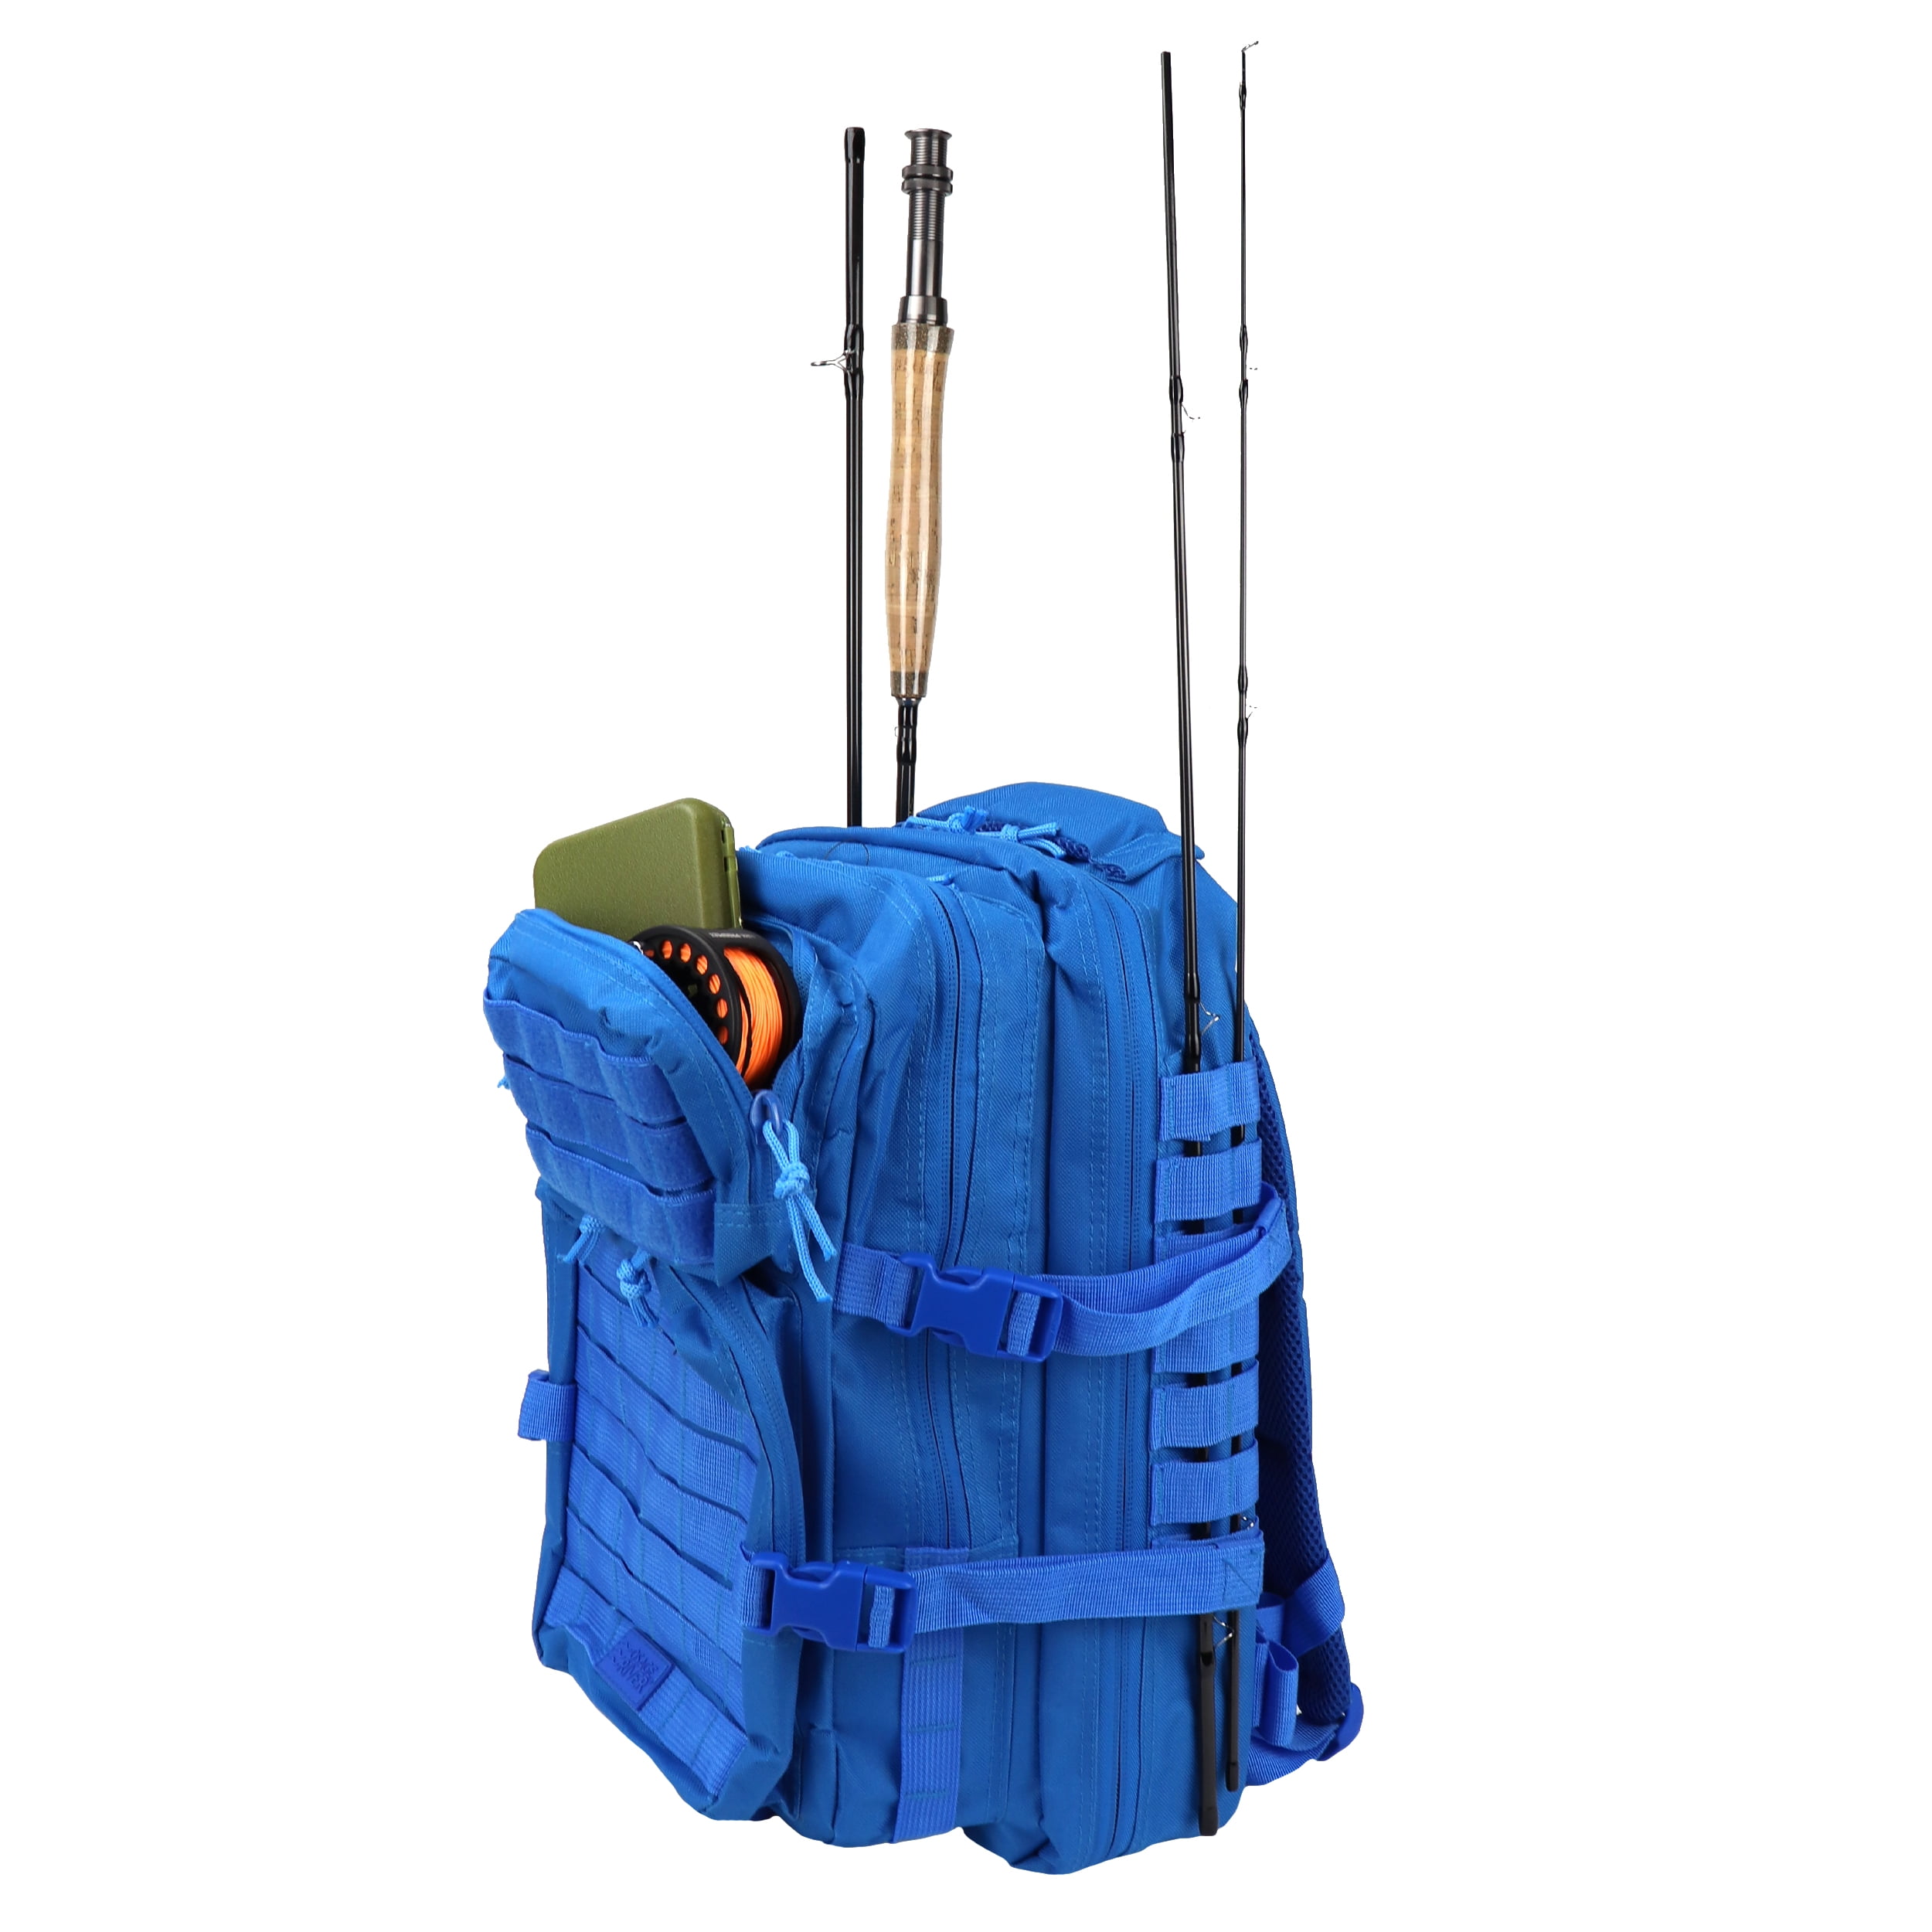 Osage River Fishing Backpack Tackle and Rod Storage - Orange